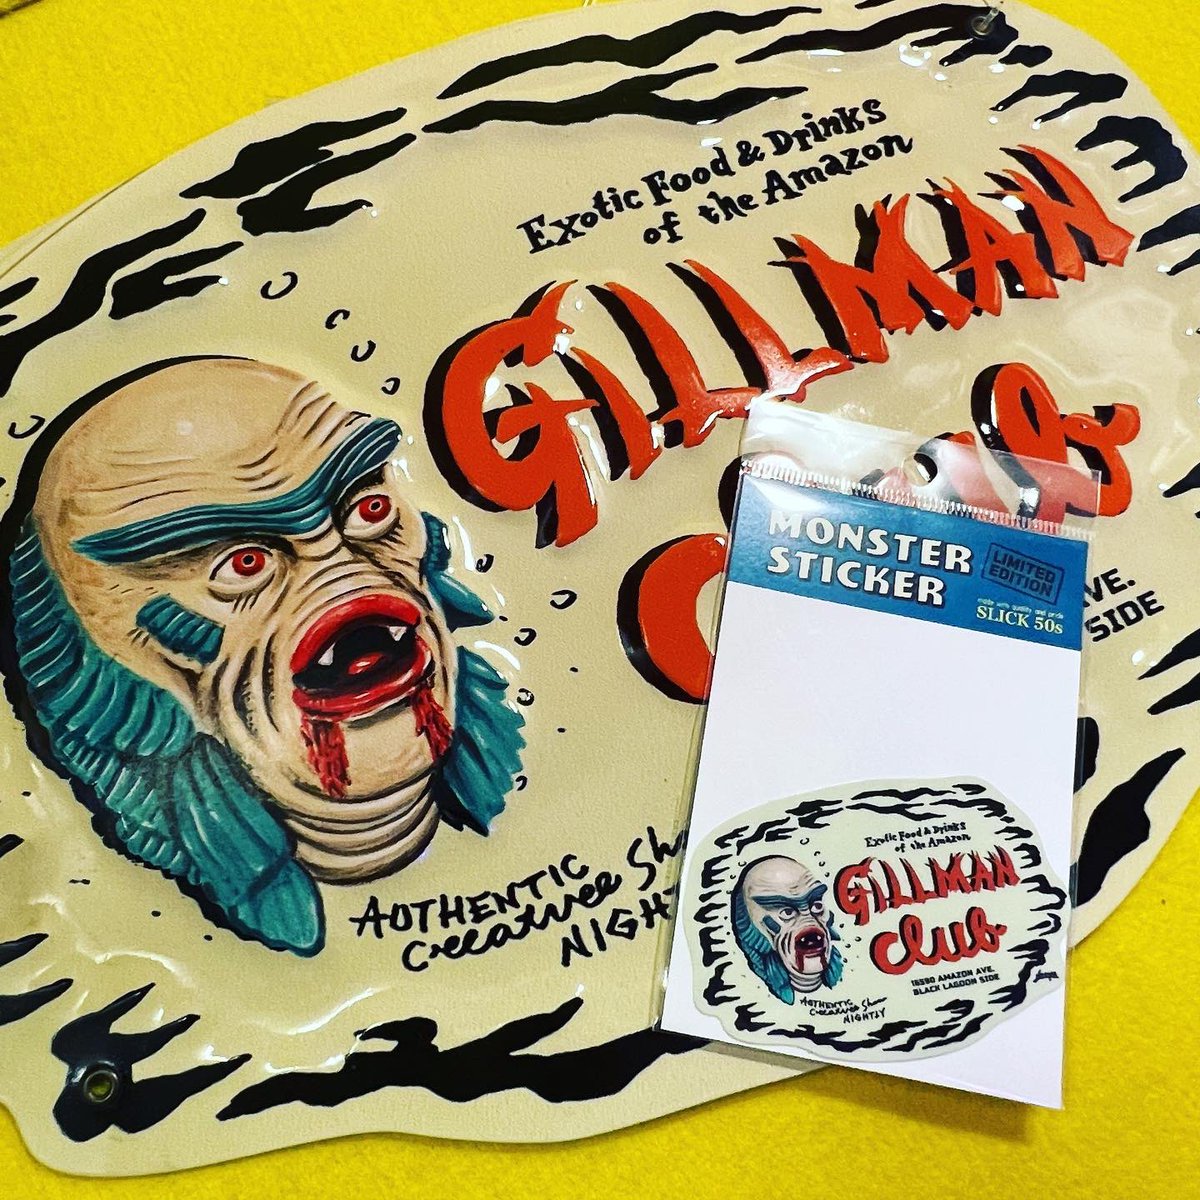 Gillman Club sticker
art work by Naoya
¥660

@collectors_mall 

#ForSale
#通販OK
#GillmanClub
#creaturefromtheblacklagoon 
#NaoyaMuga